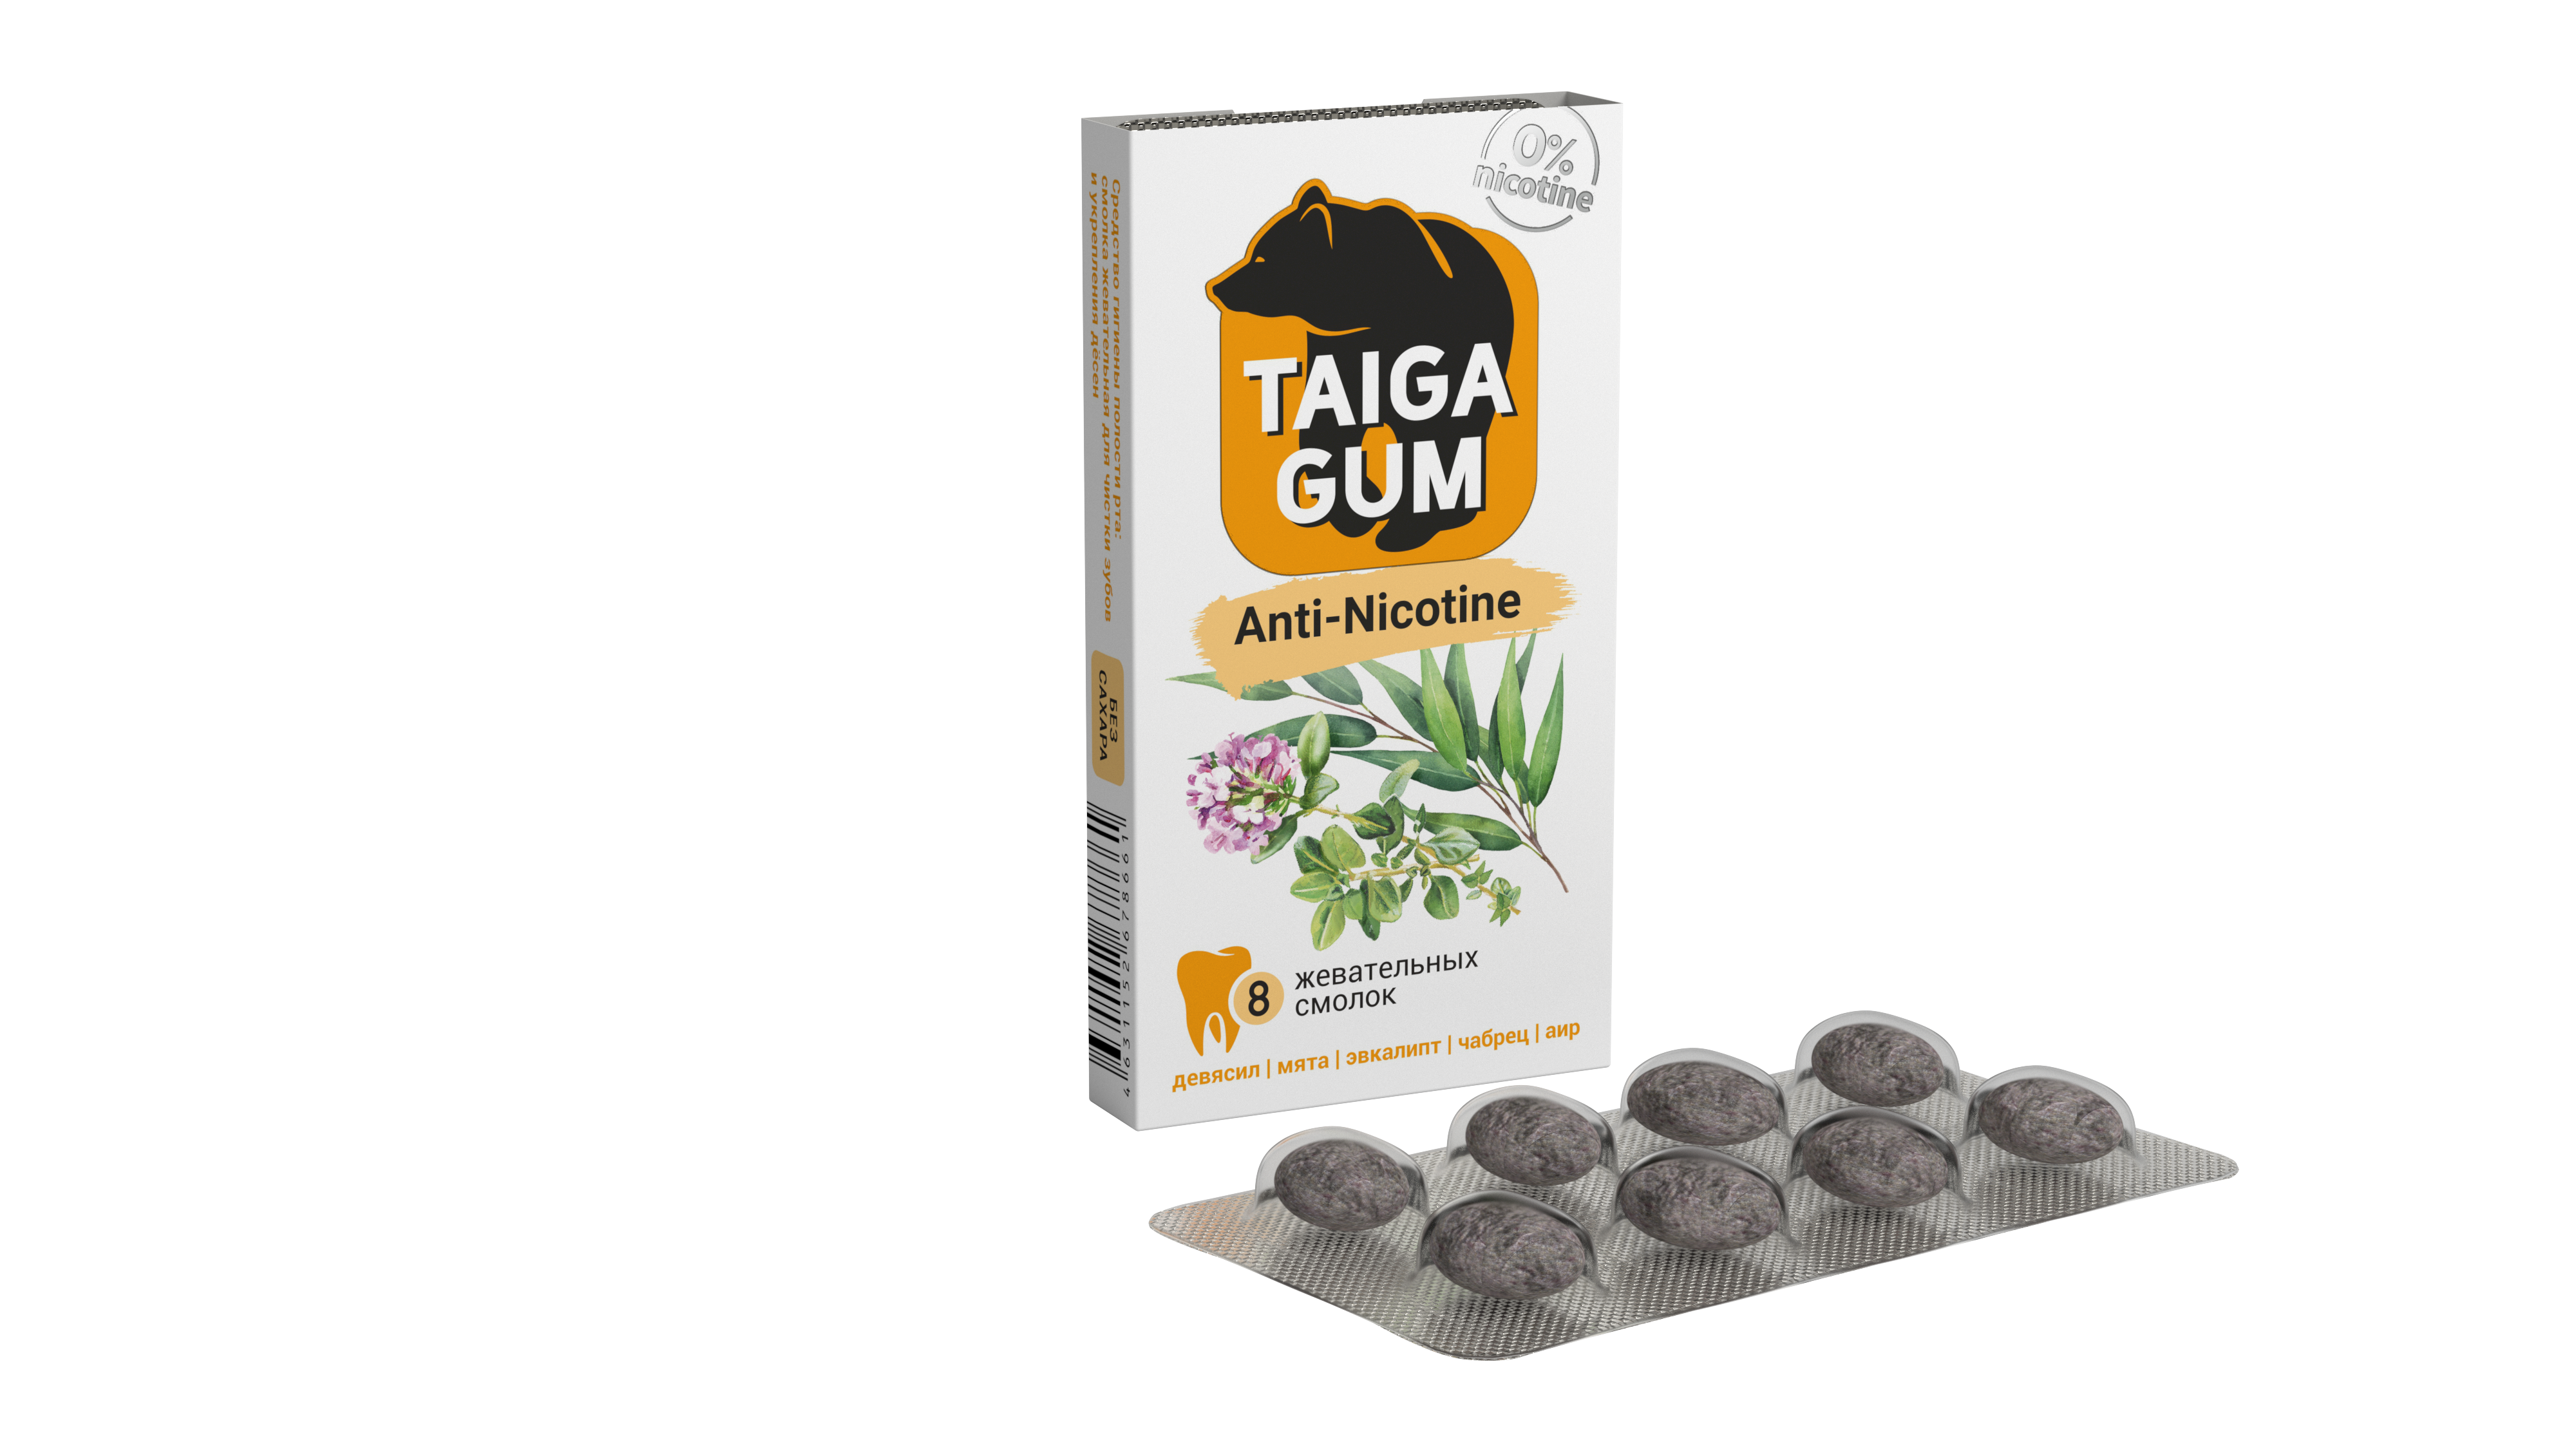 Taiga gum смолка жевательная anti-nicotine девясил/мята/эвкалипт/чабрец/аир драже без сахара N 8